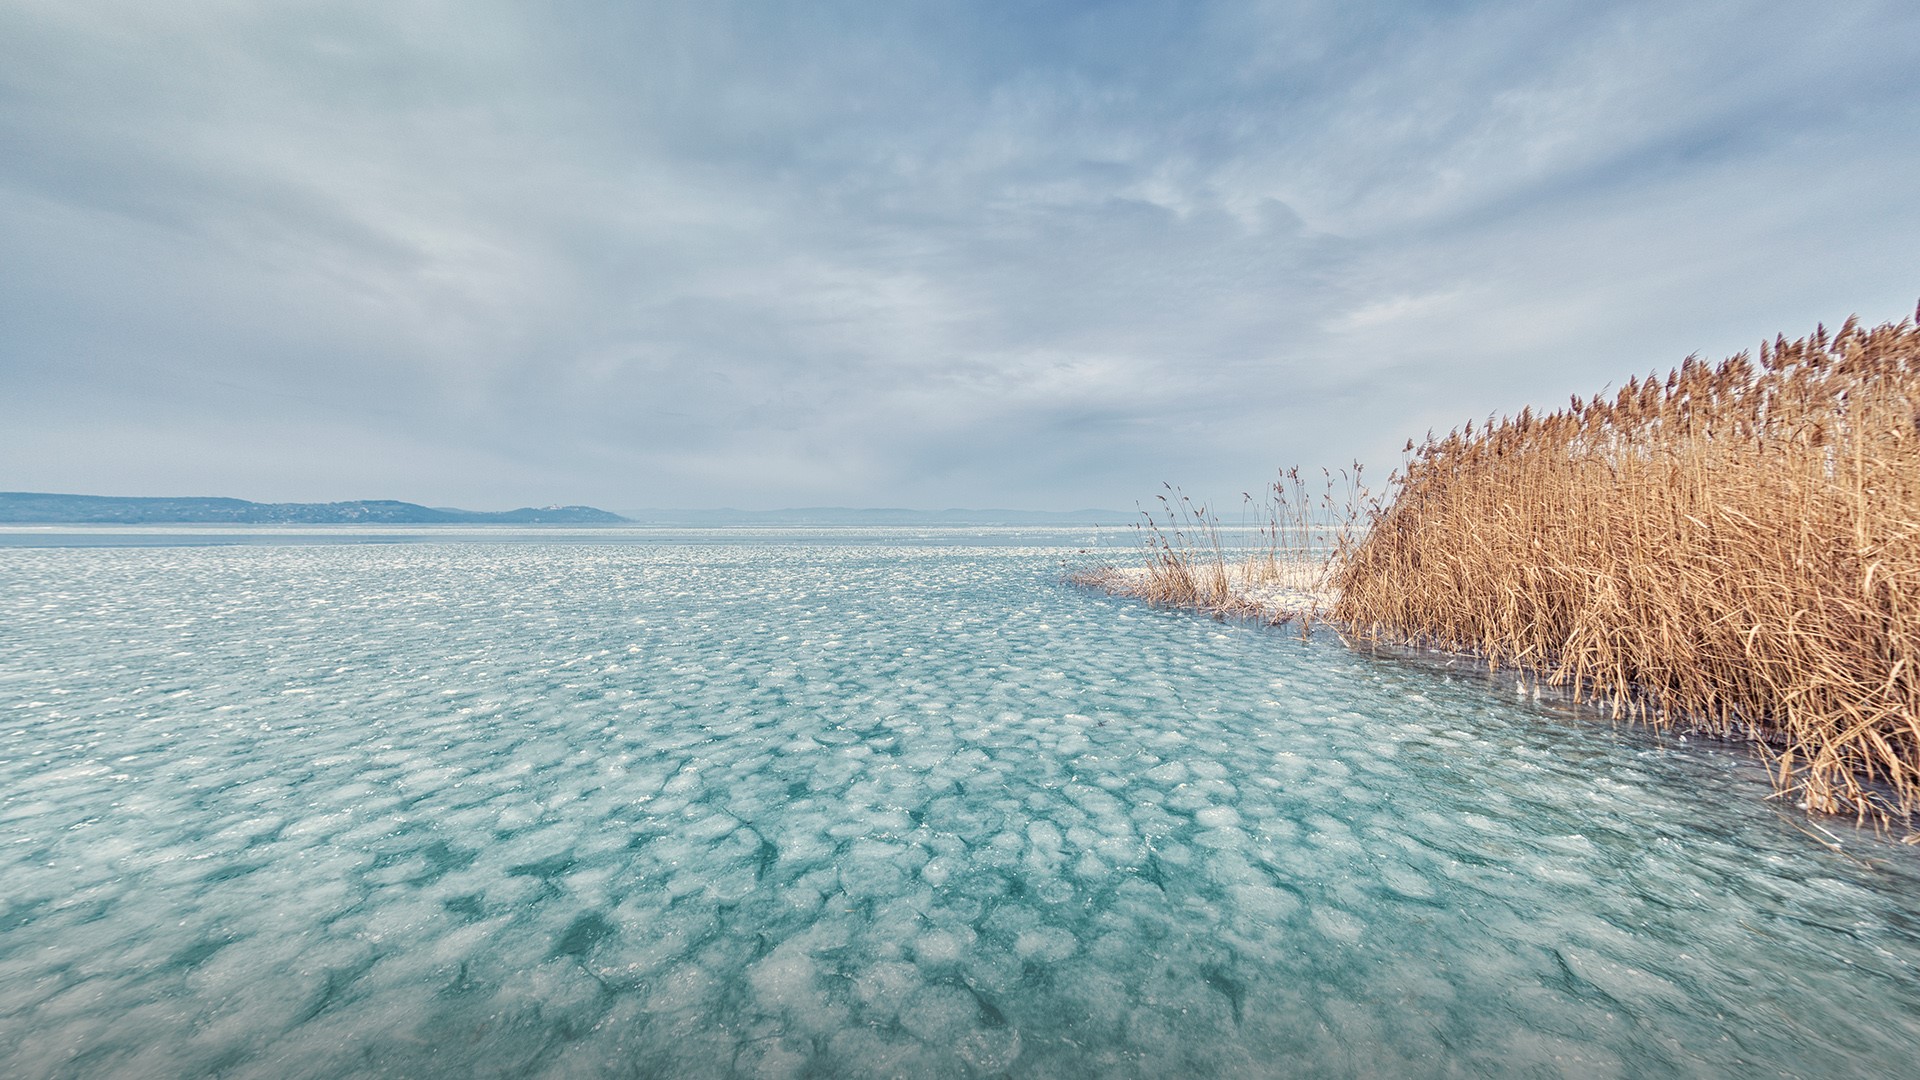 General 1920x1080 nature landscape plants clouds mountains frozen river frozen lake Hungary Lake Balaton